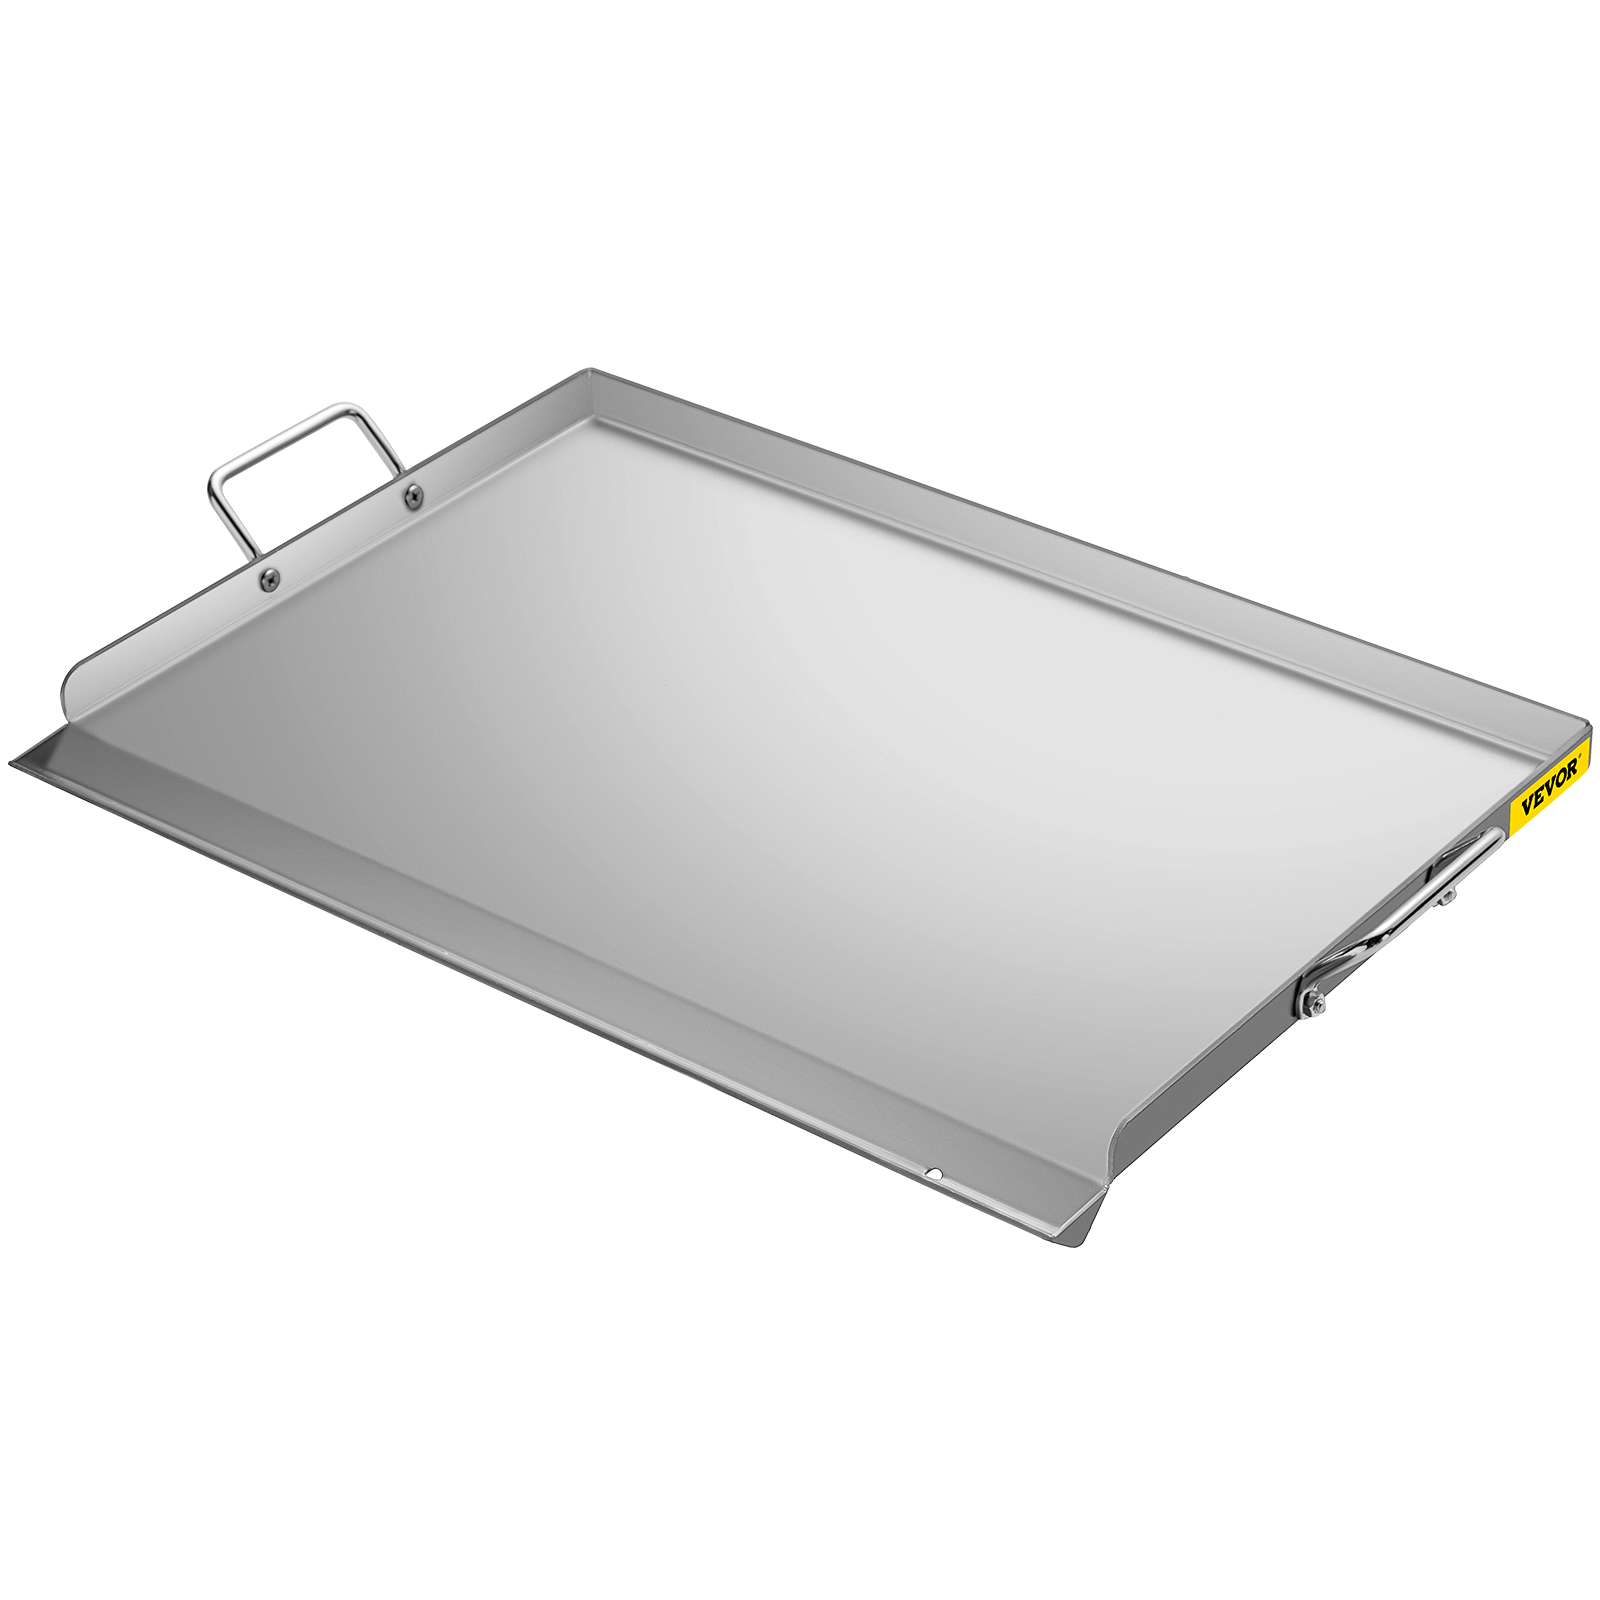 La Ideal - Plancha rectangular de hierro fundido (35 x 50 cm